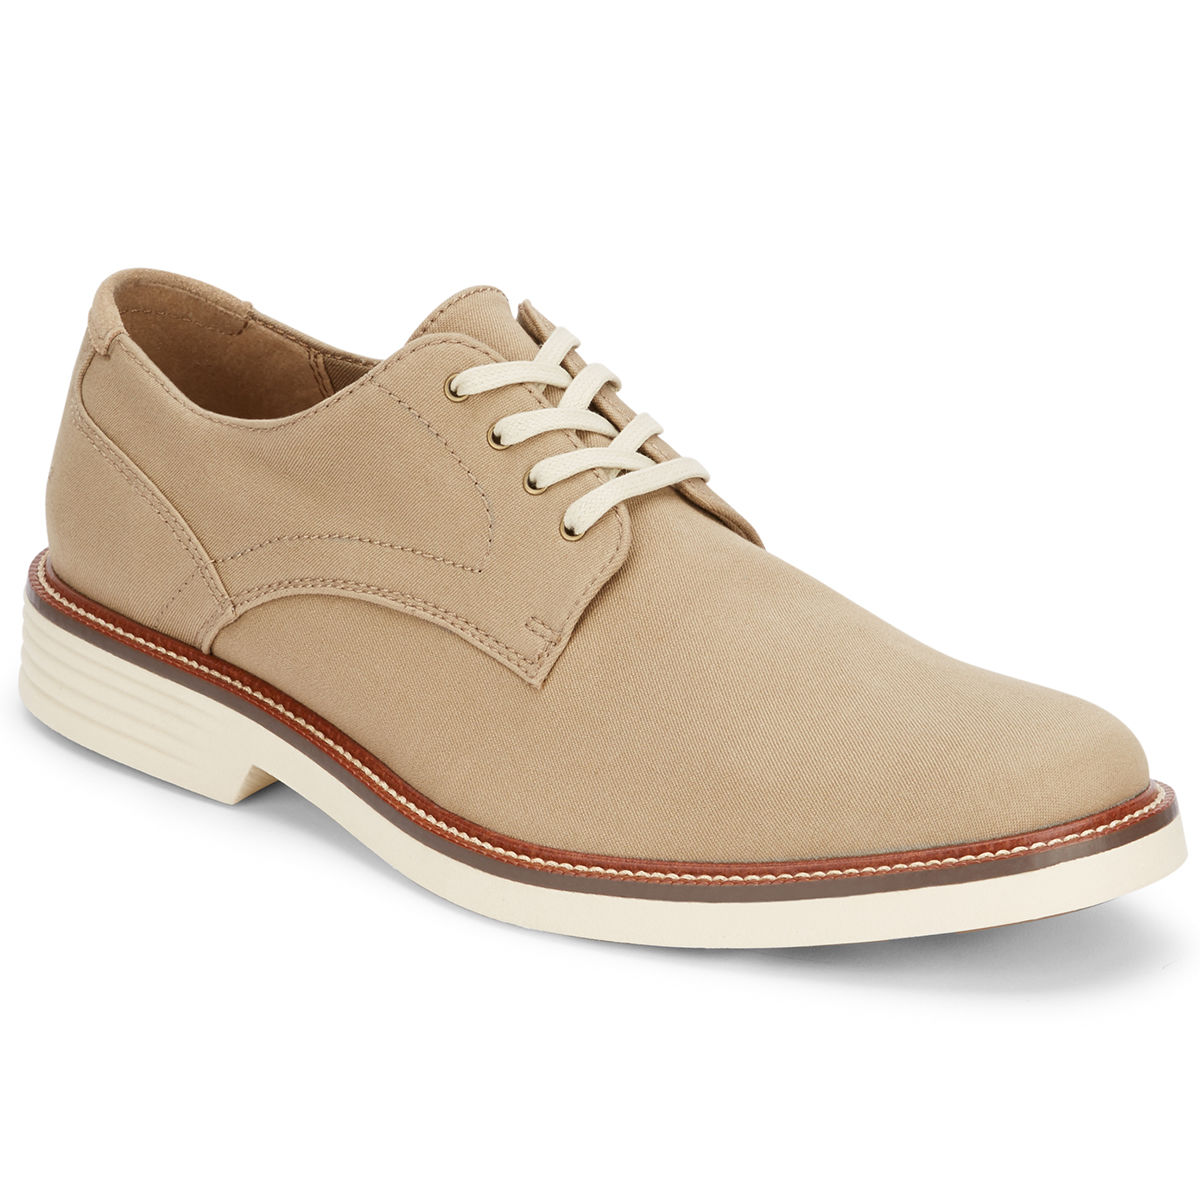 Dockers Men's Parkway Plain Toe Oxford Shoes - White, 9